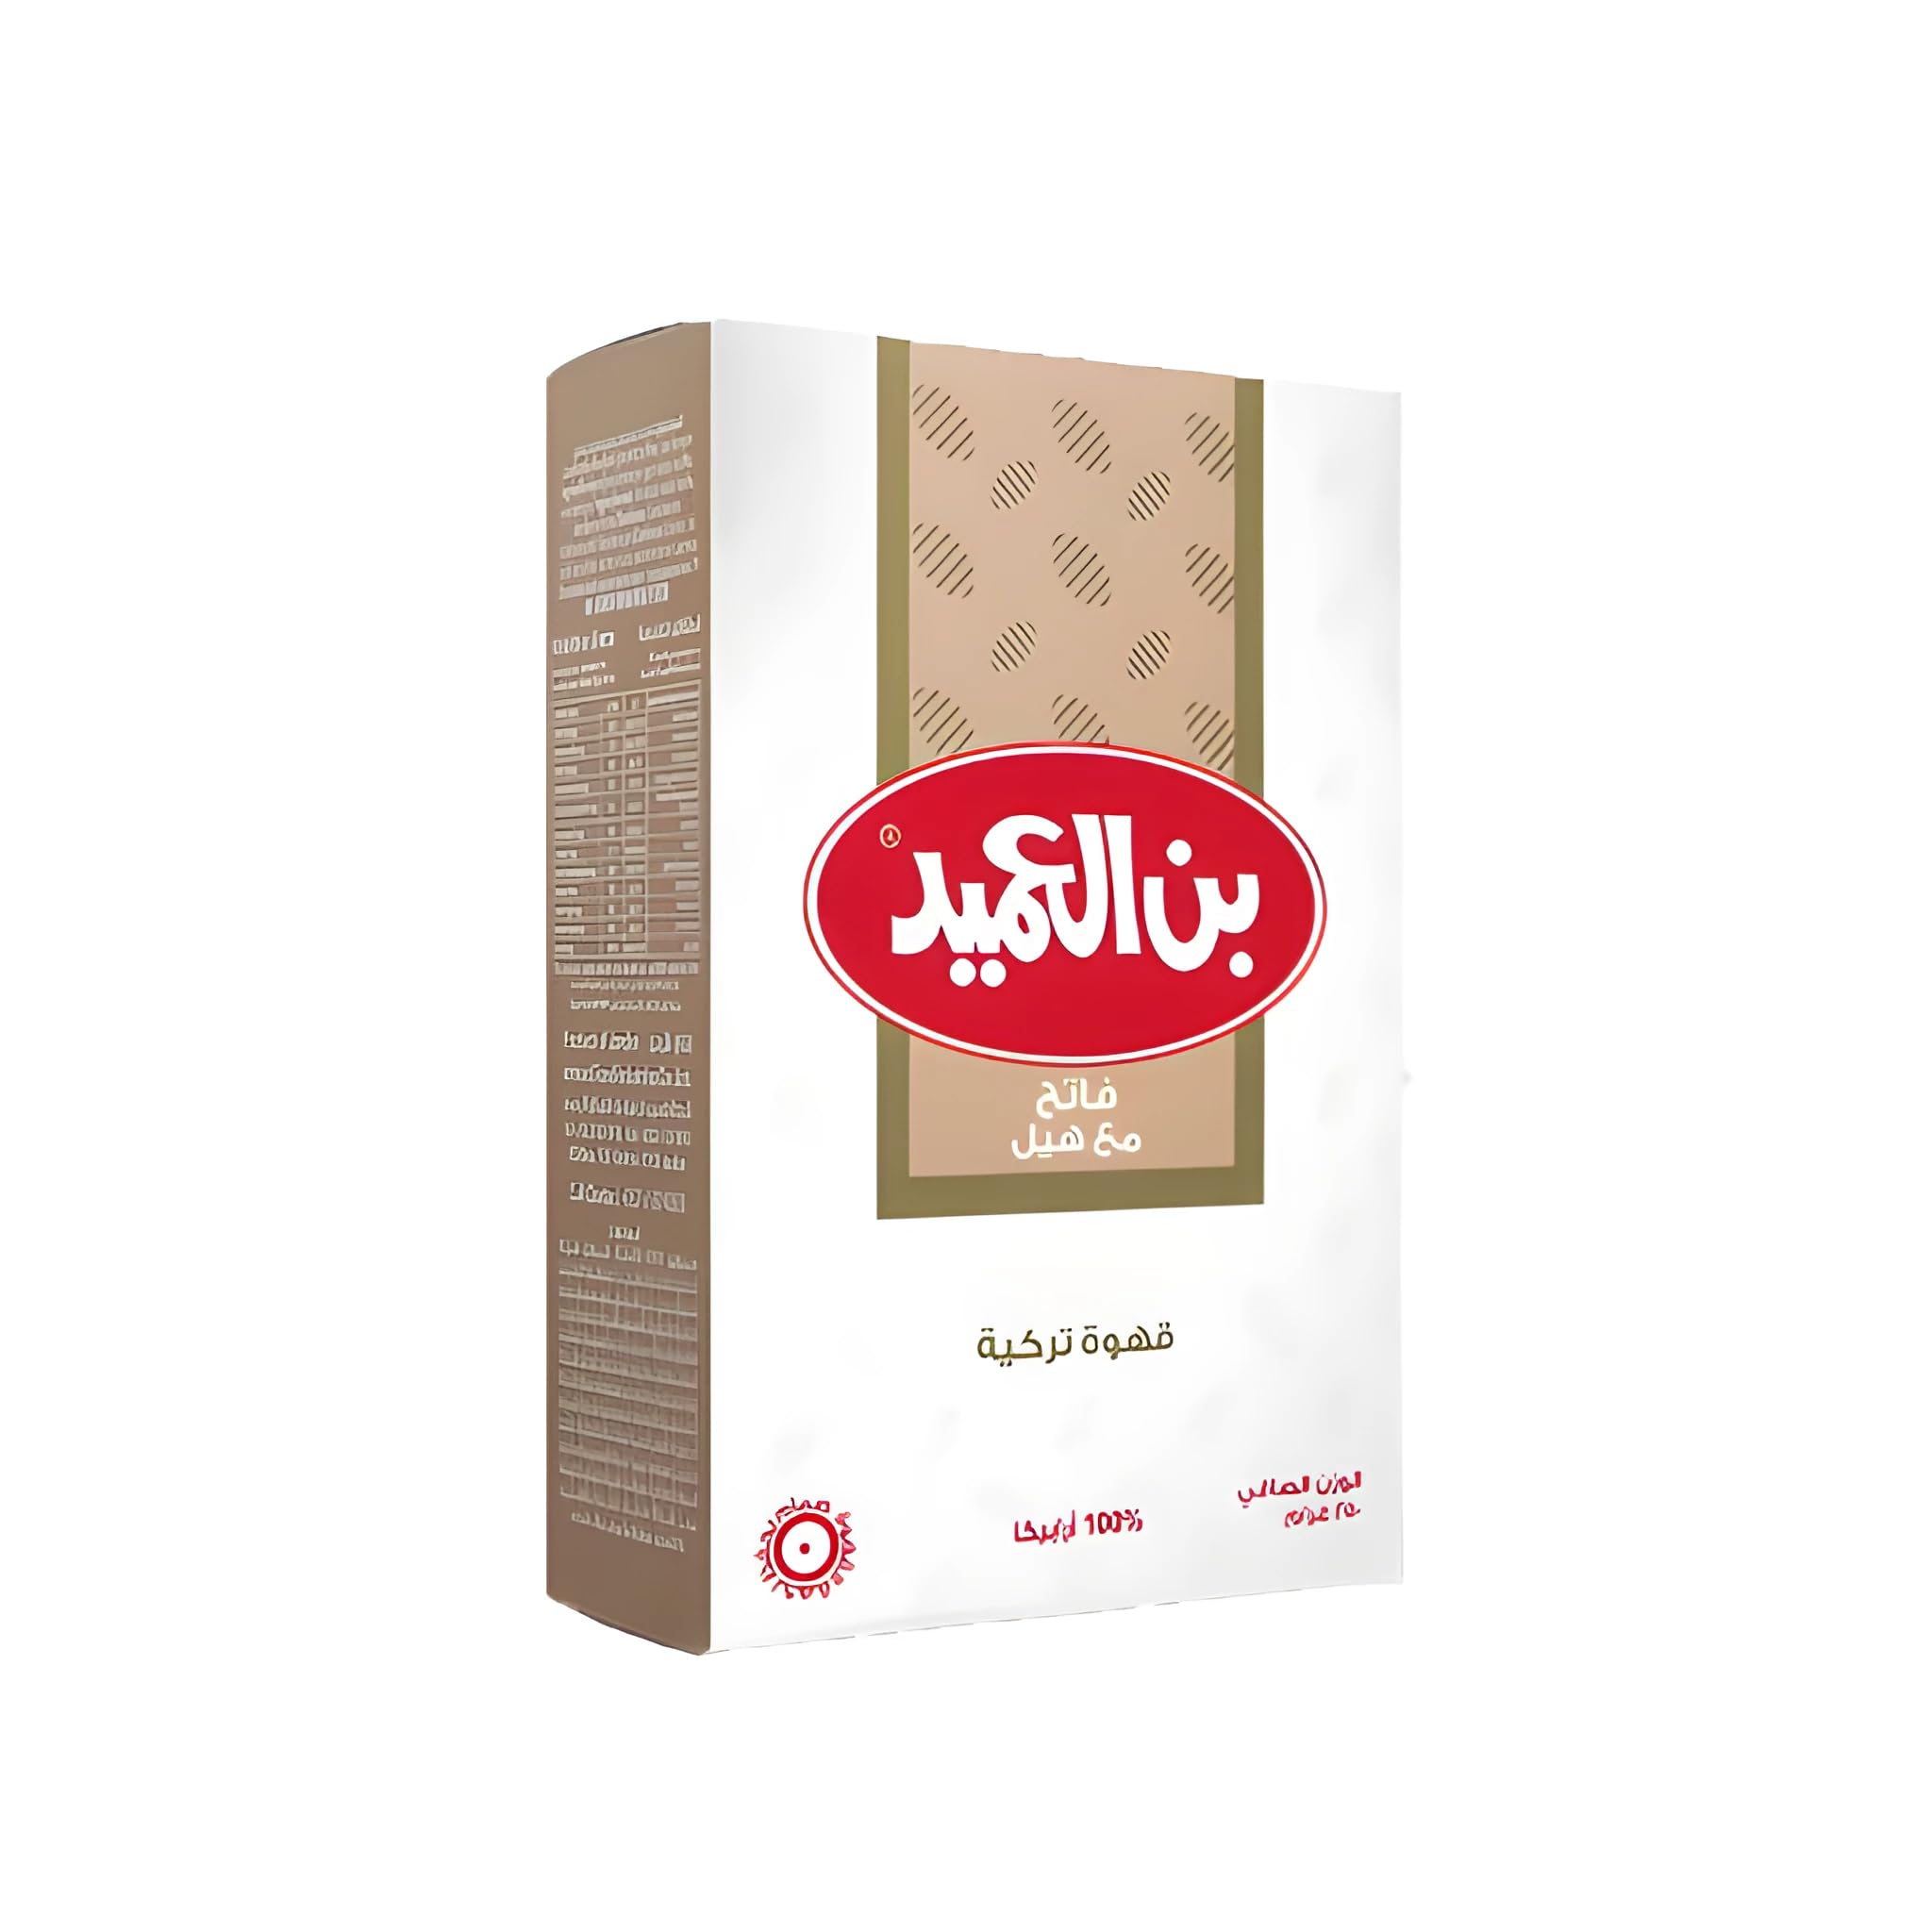 Al-Ameed Light Coffee with Cardamom 250 g